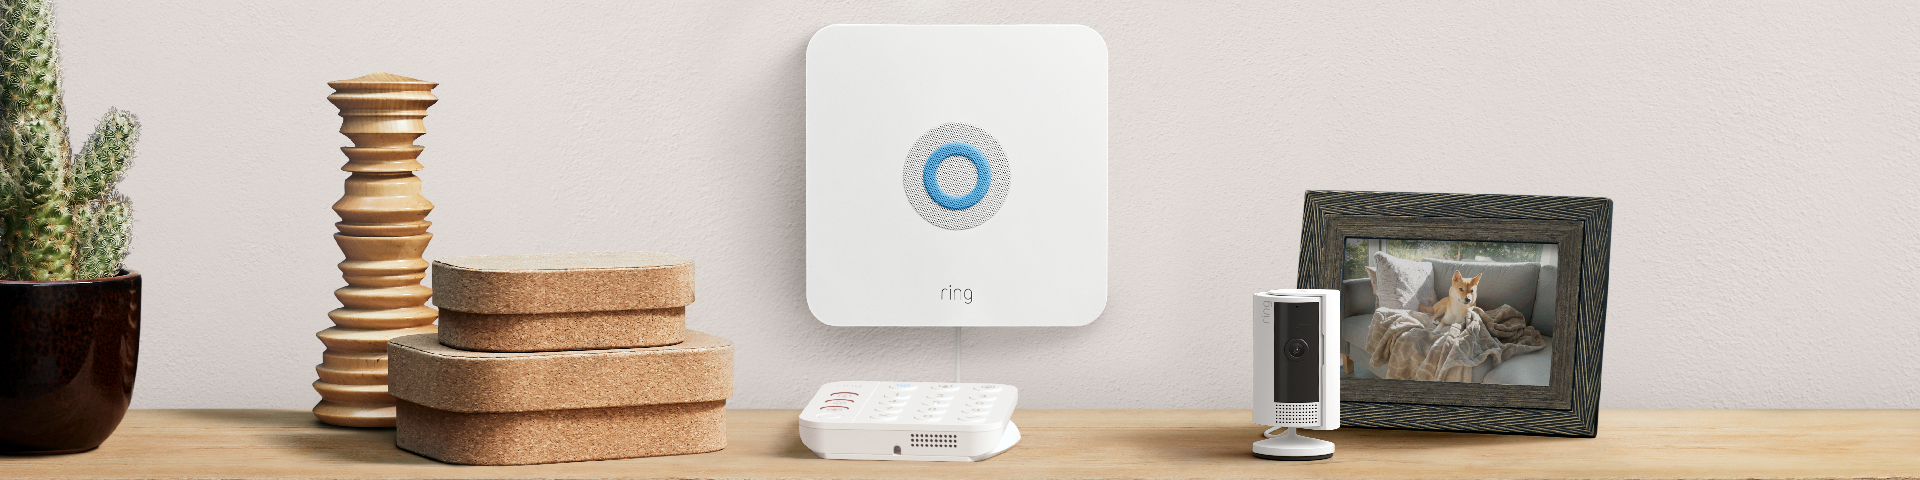 Why I Use Ring for My HomeKit & Alexa Smart Home! - YouTube